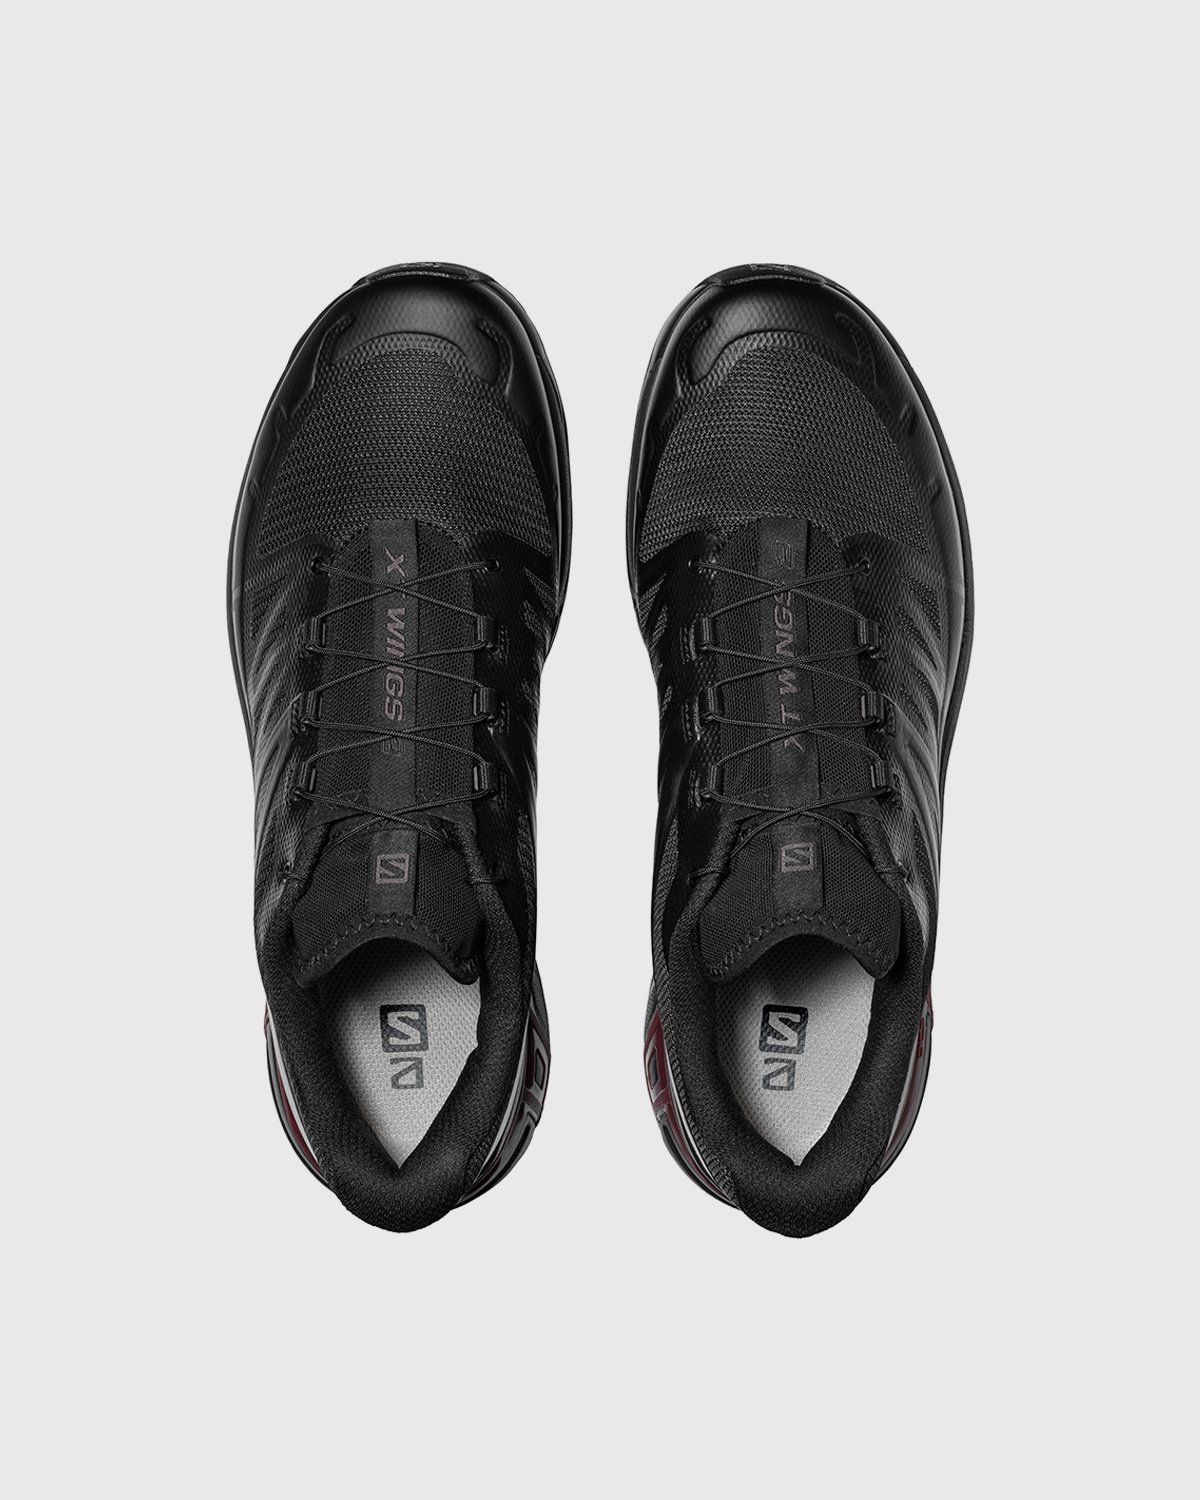 Salomon – XT-Wings 2 Advanced Black - Sneakers - Black - Image 4